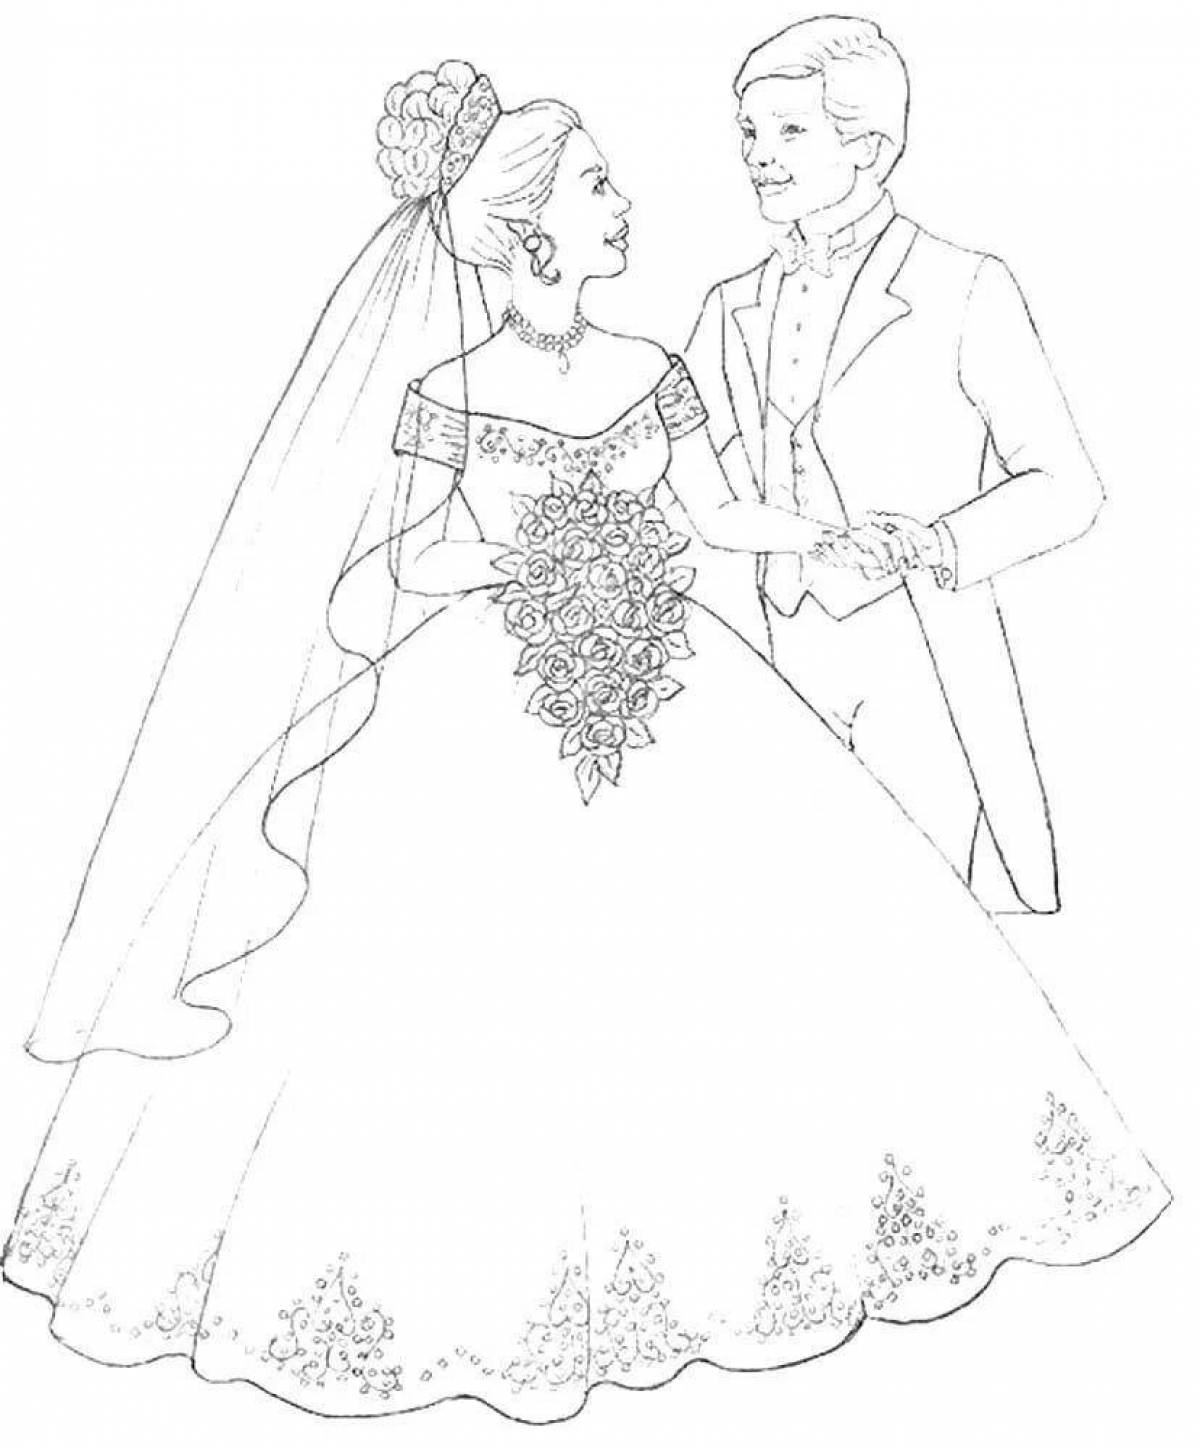 Exquisite bride coloring page